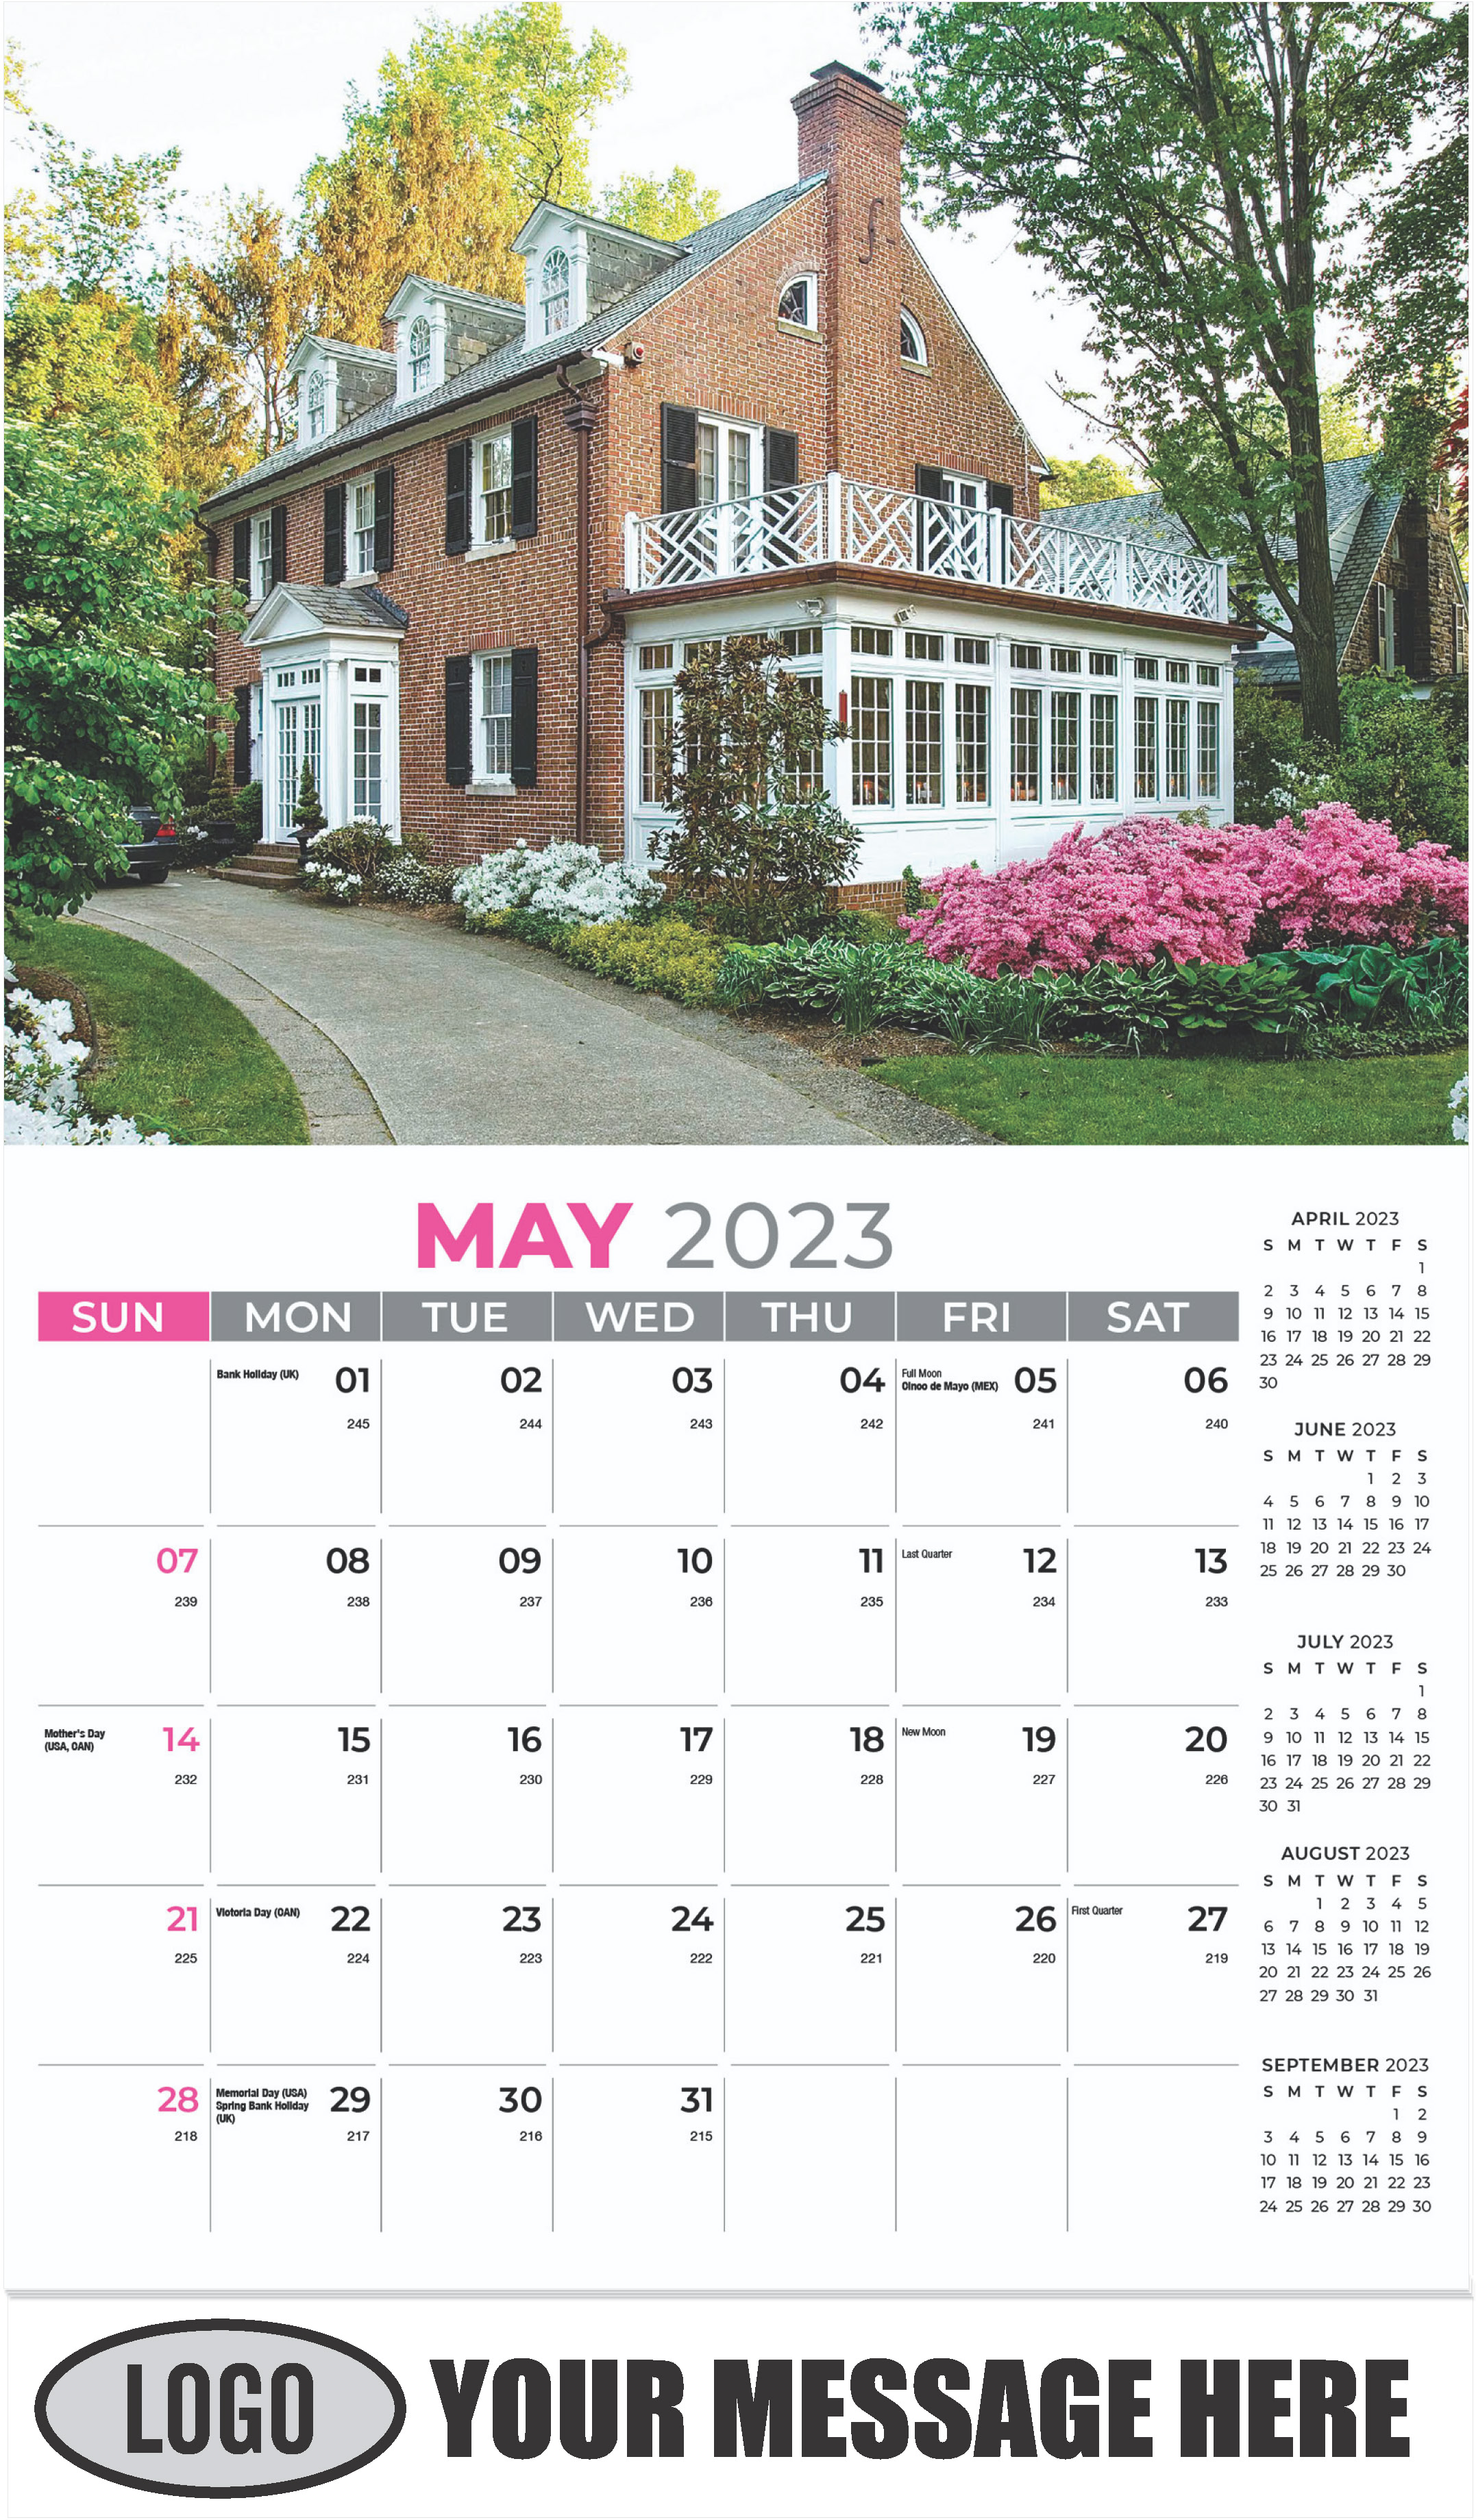 Luxury Homes Calendar - May - Homes 2023 Promotional Calendar